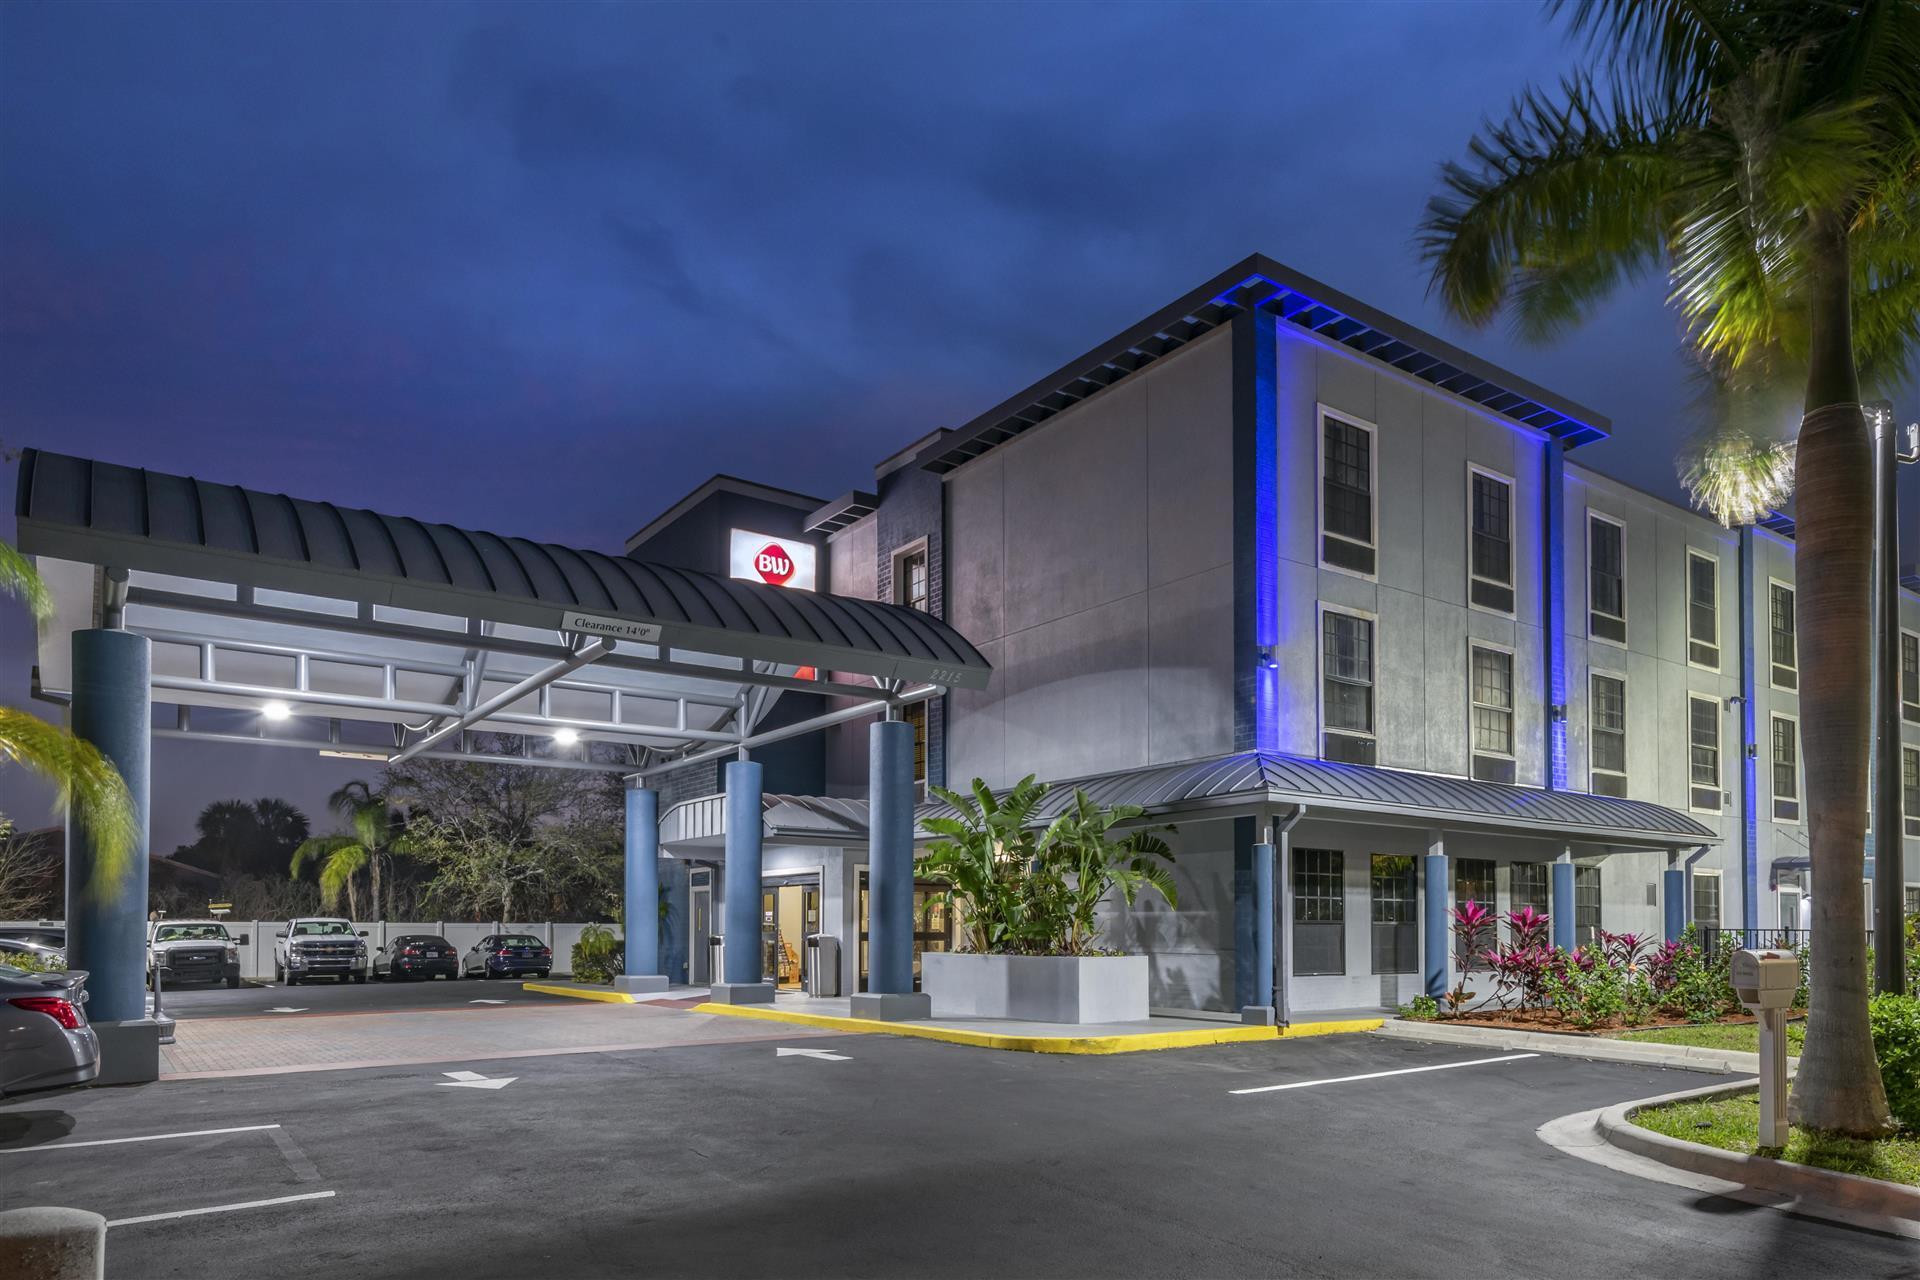 Best Western Plus Bradenton Gateway Hotel in Bradenton, FL